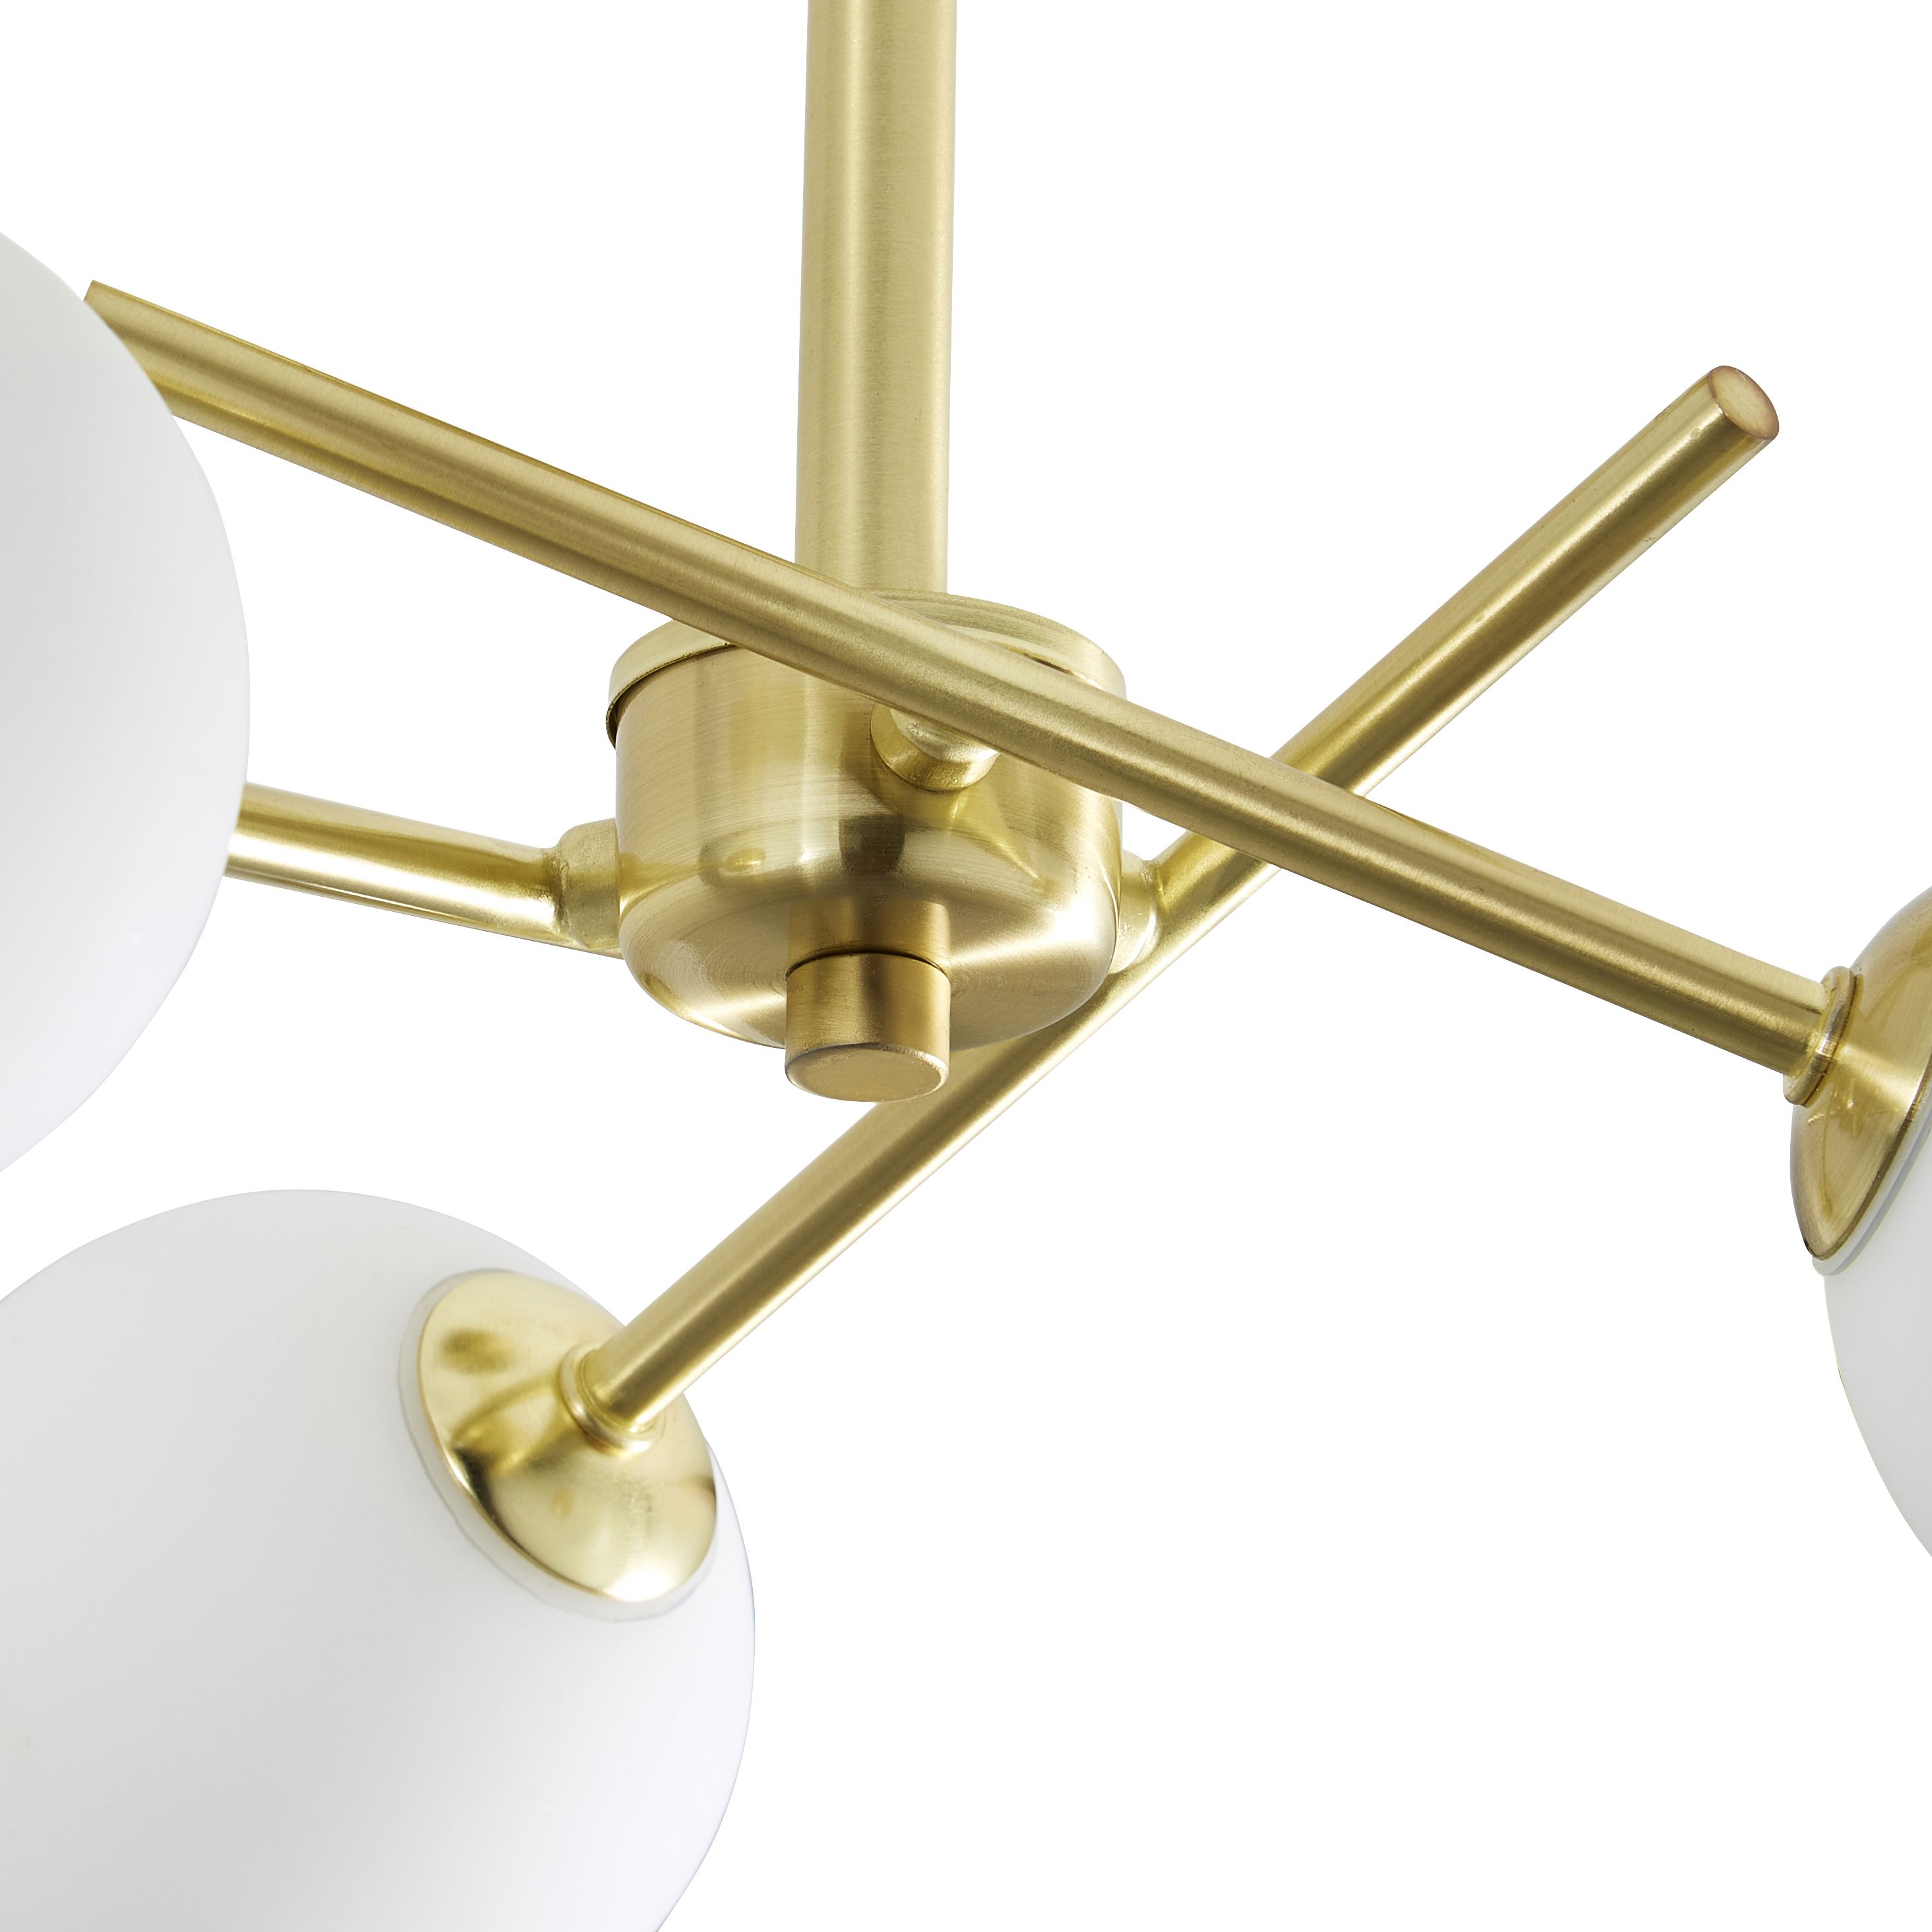 Spa Avalon Brushed Satin Steel satin brass effect 3 Lamp LED Bathroom ceiling light